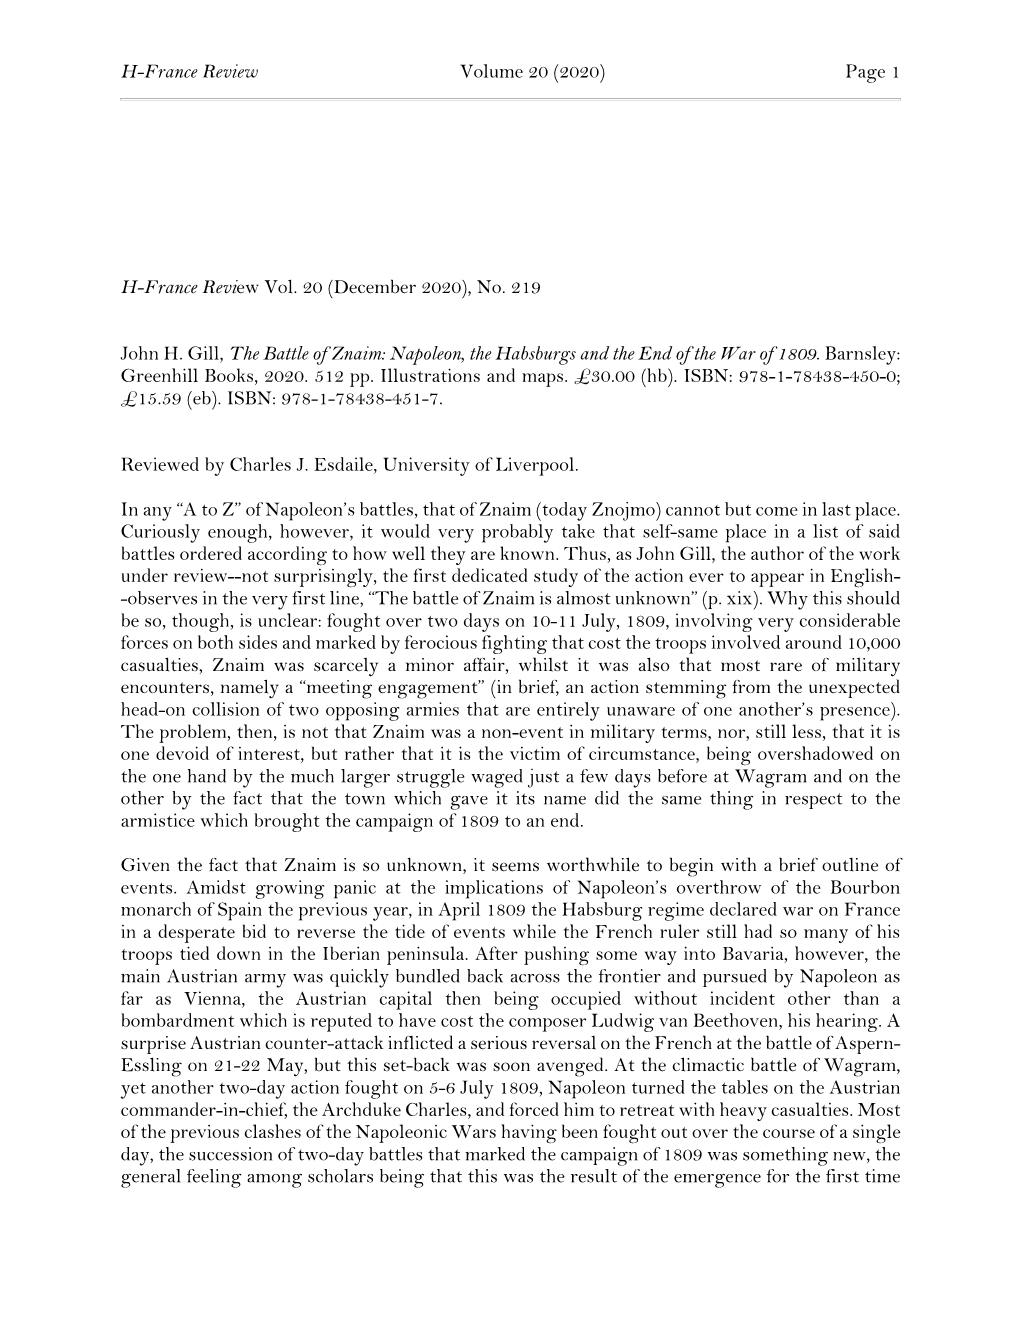 H-France Review Vol. 20 (December 2020), No. 219 John H. Gill, the Battle of Znaim